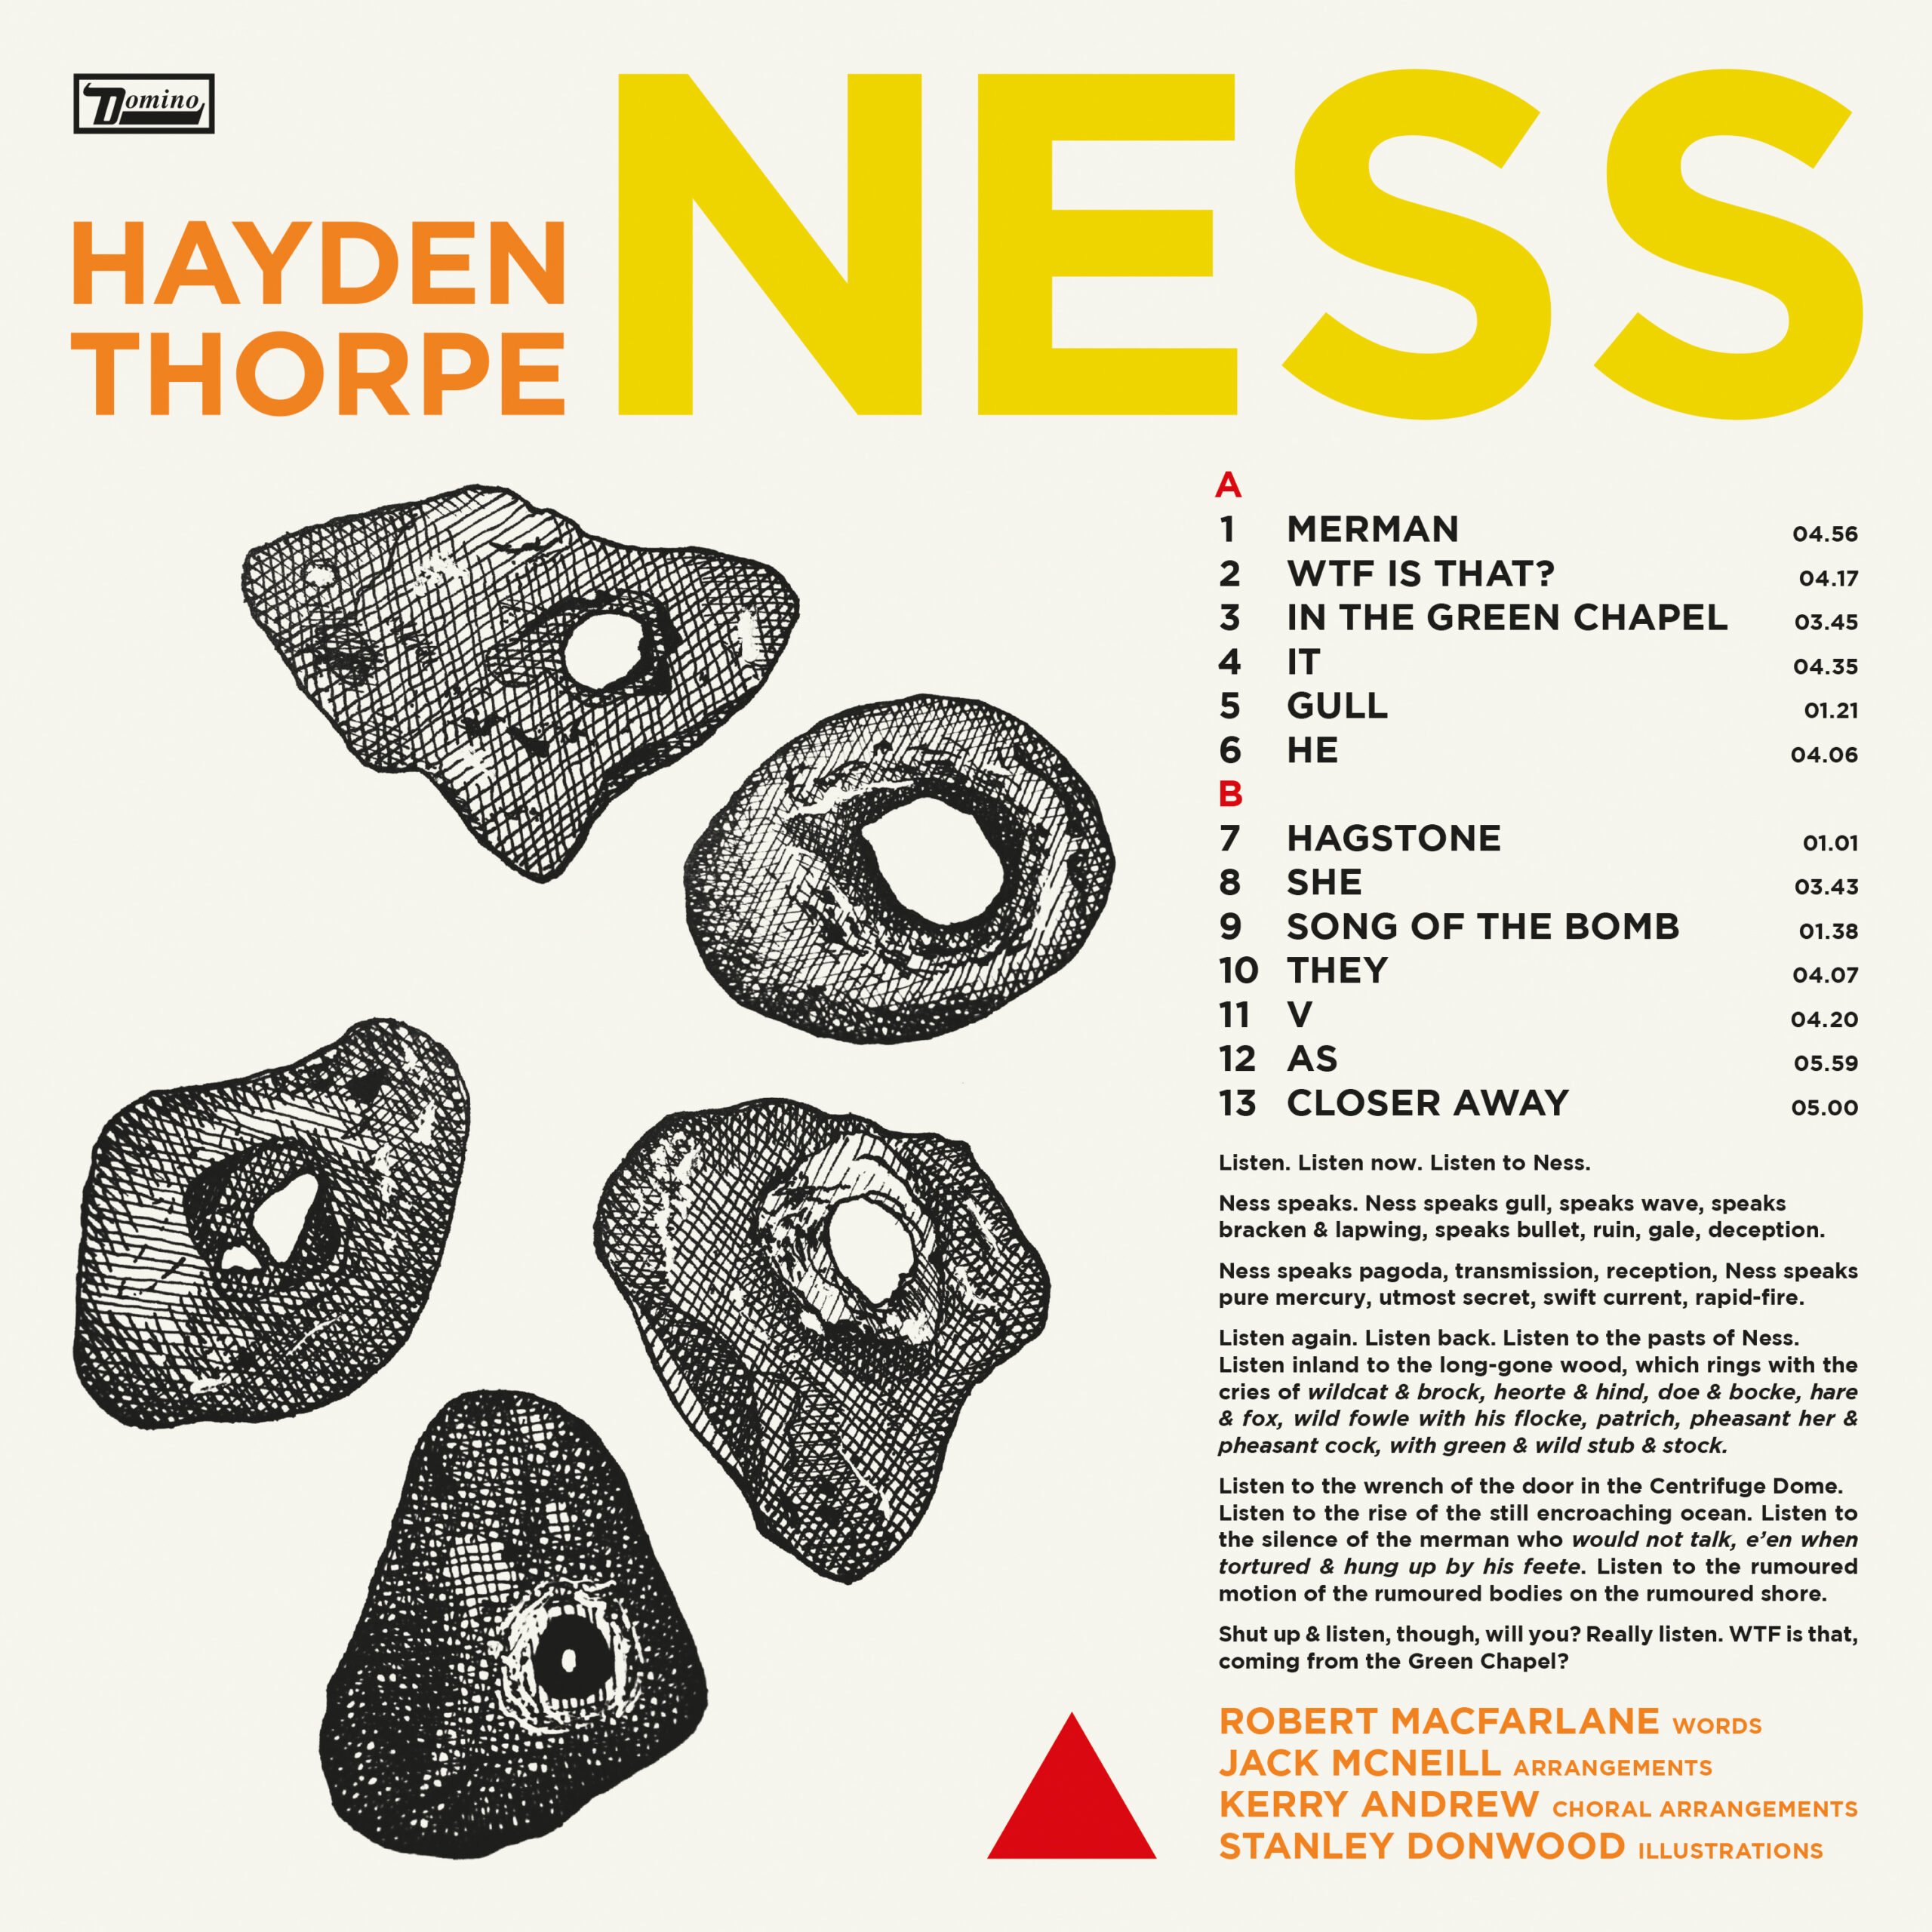 Hayden Thorpe – “They”